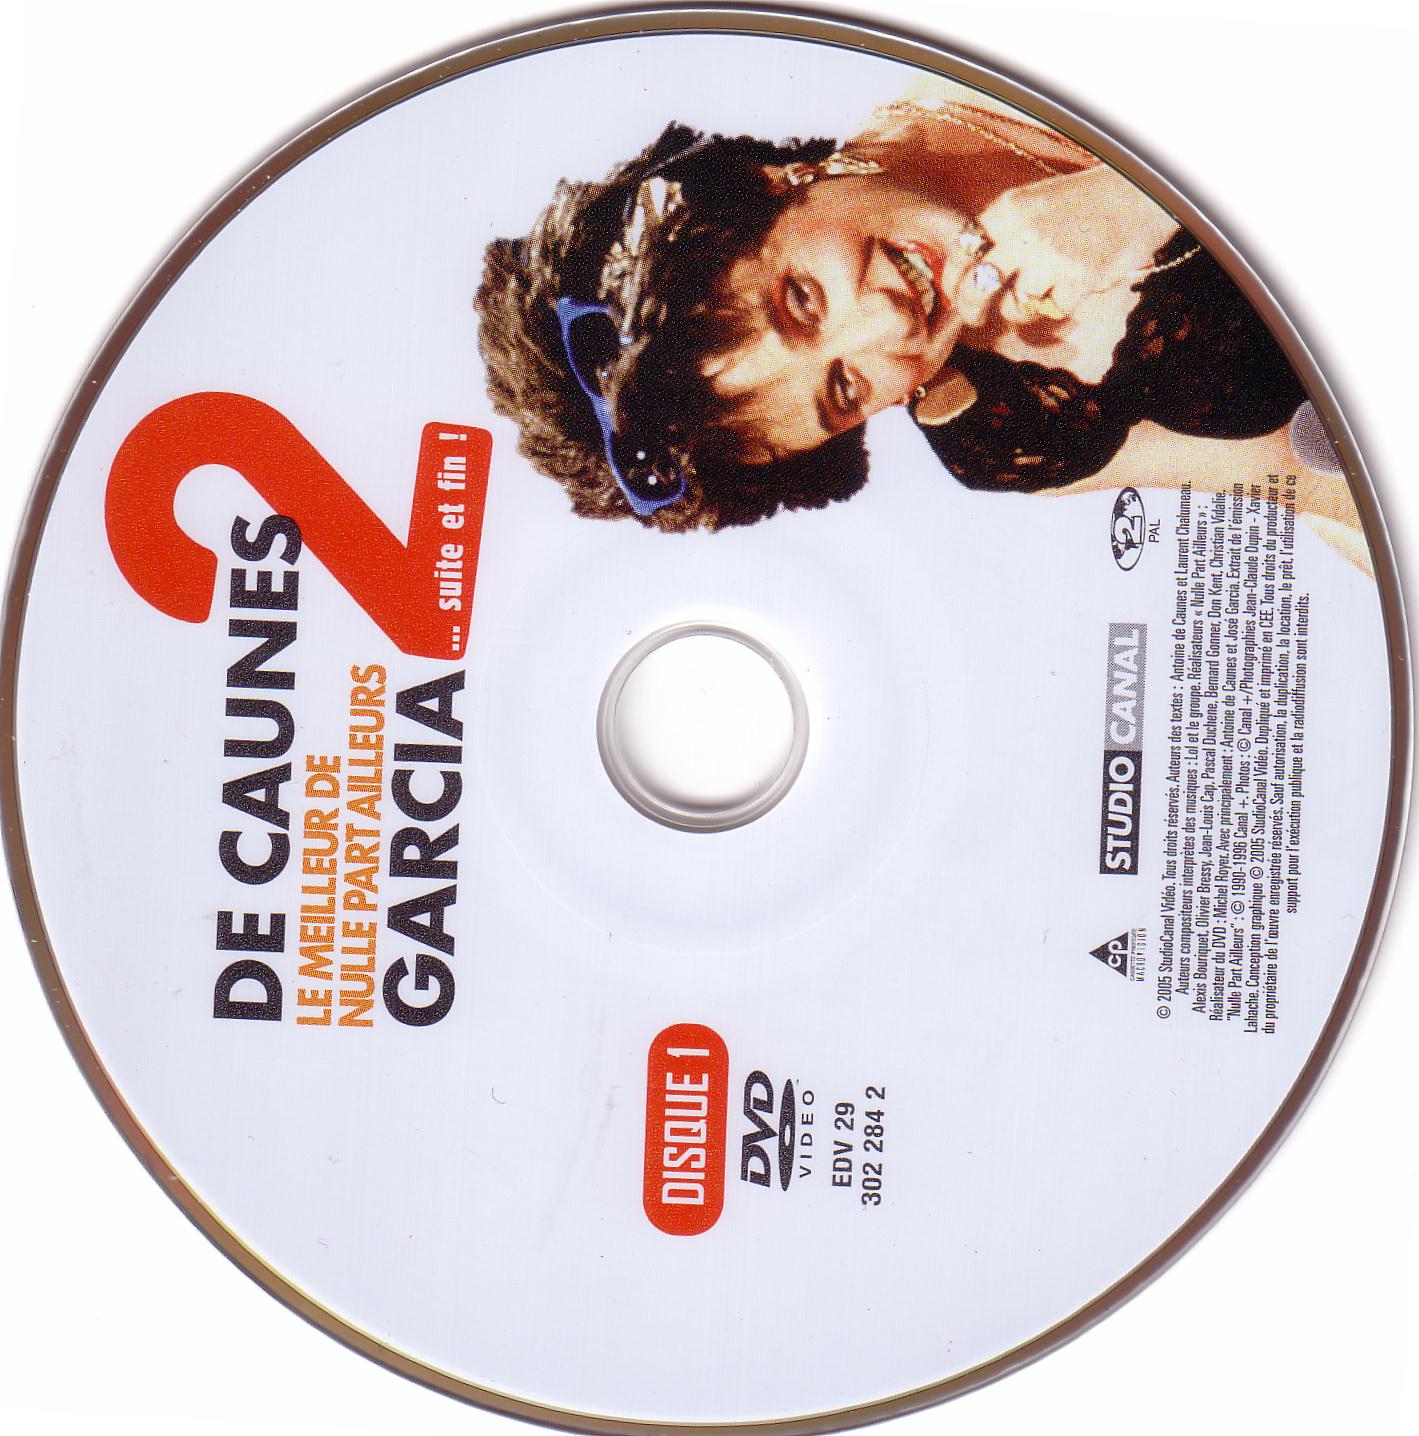 De caunes - Garcia 2 DVD 1